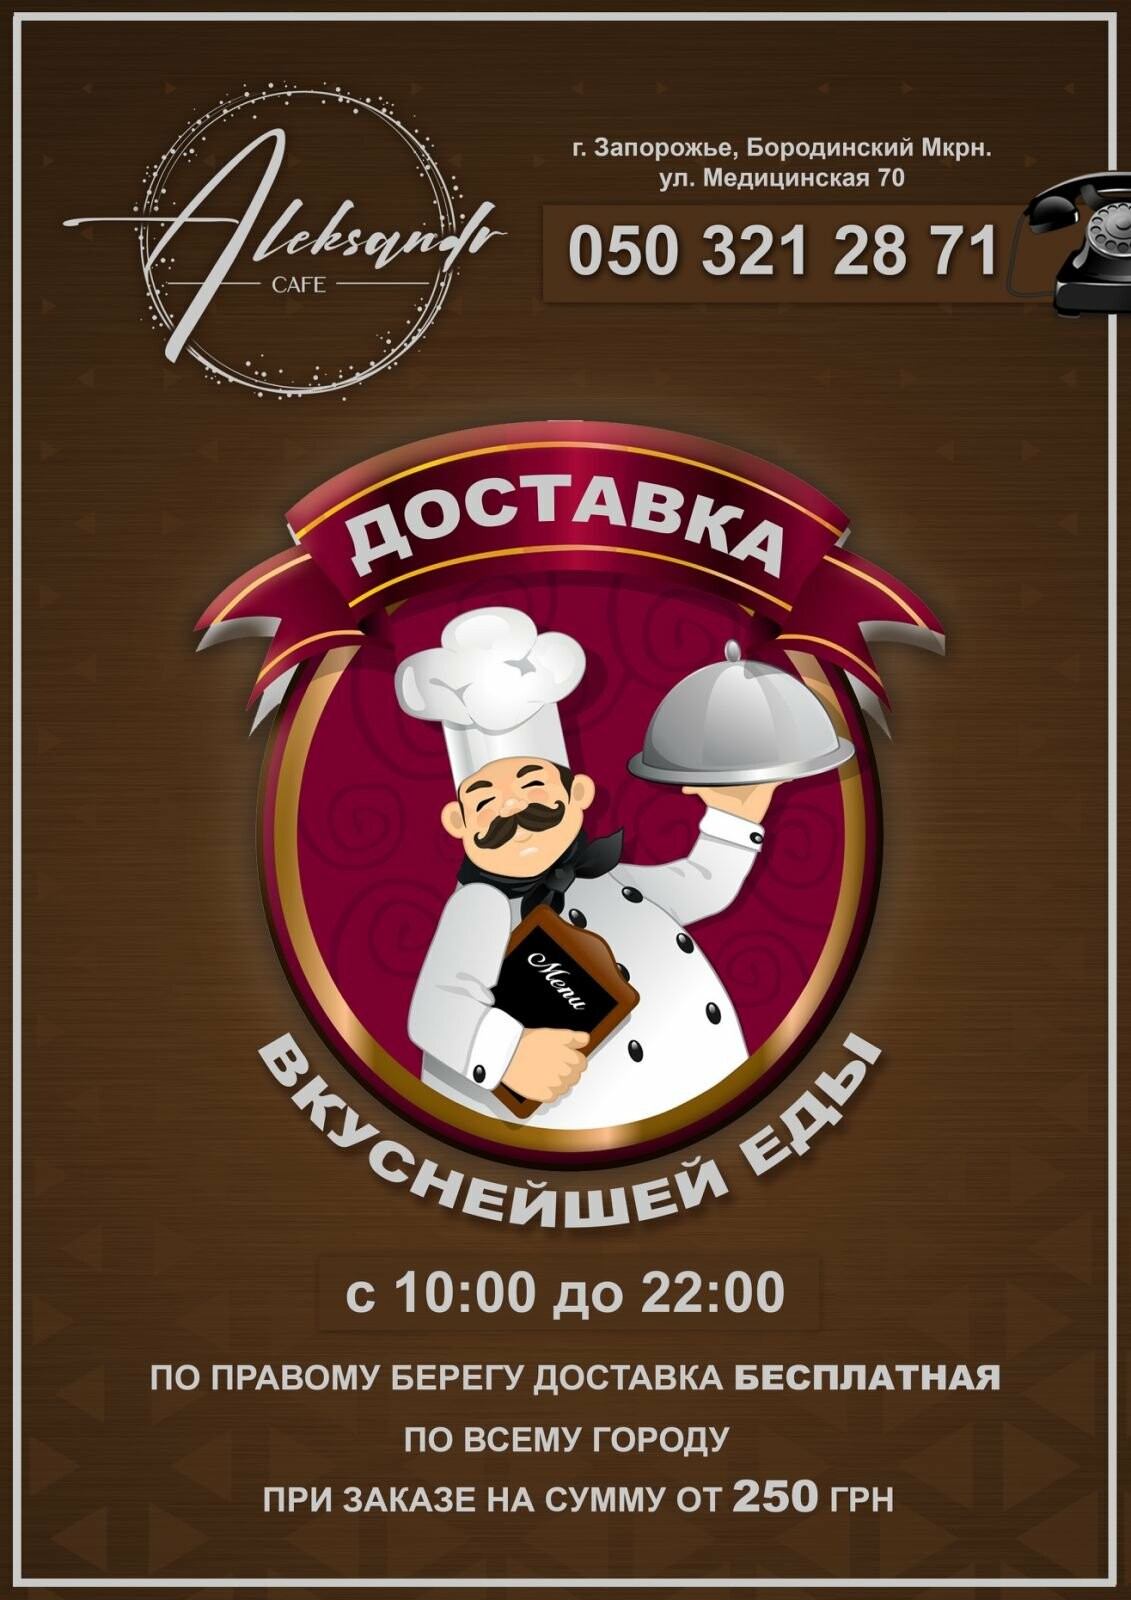 Доставка еды в Запорожье кафе Александр, фото-1